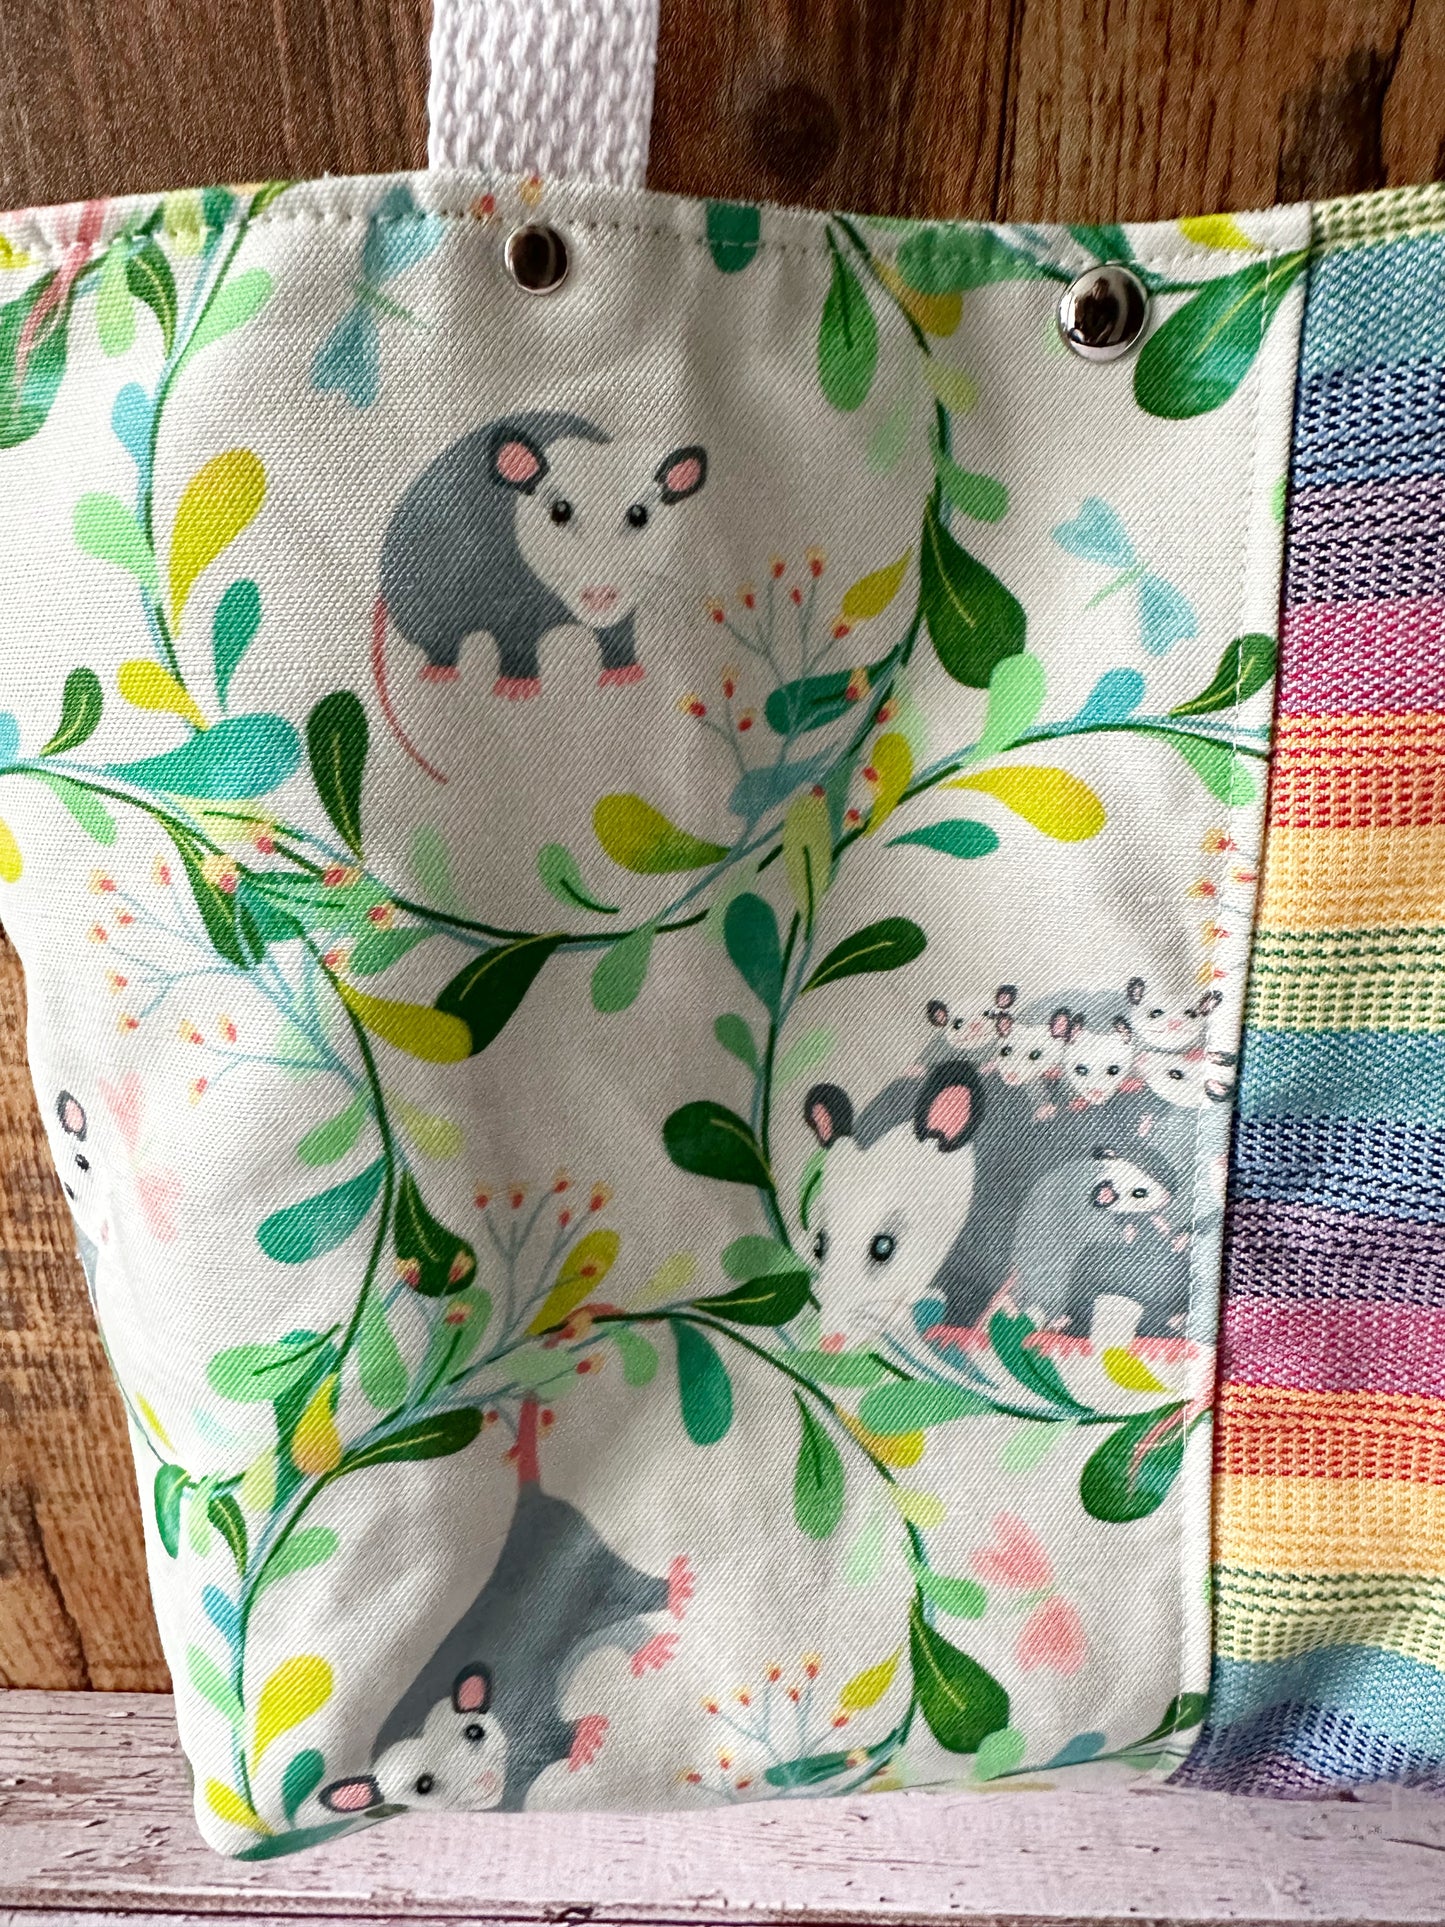 Adorable Opossum Tote Bag with Zipper Pocket Divider